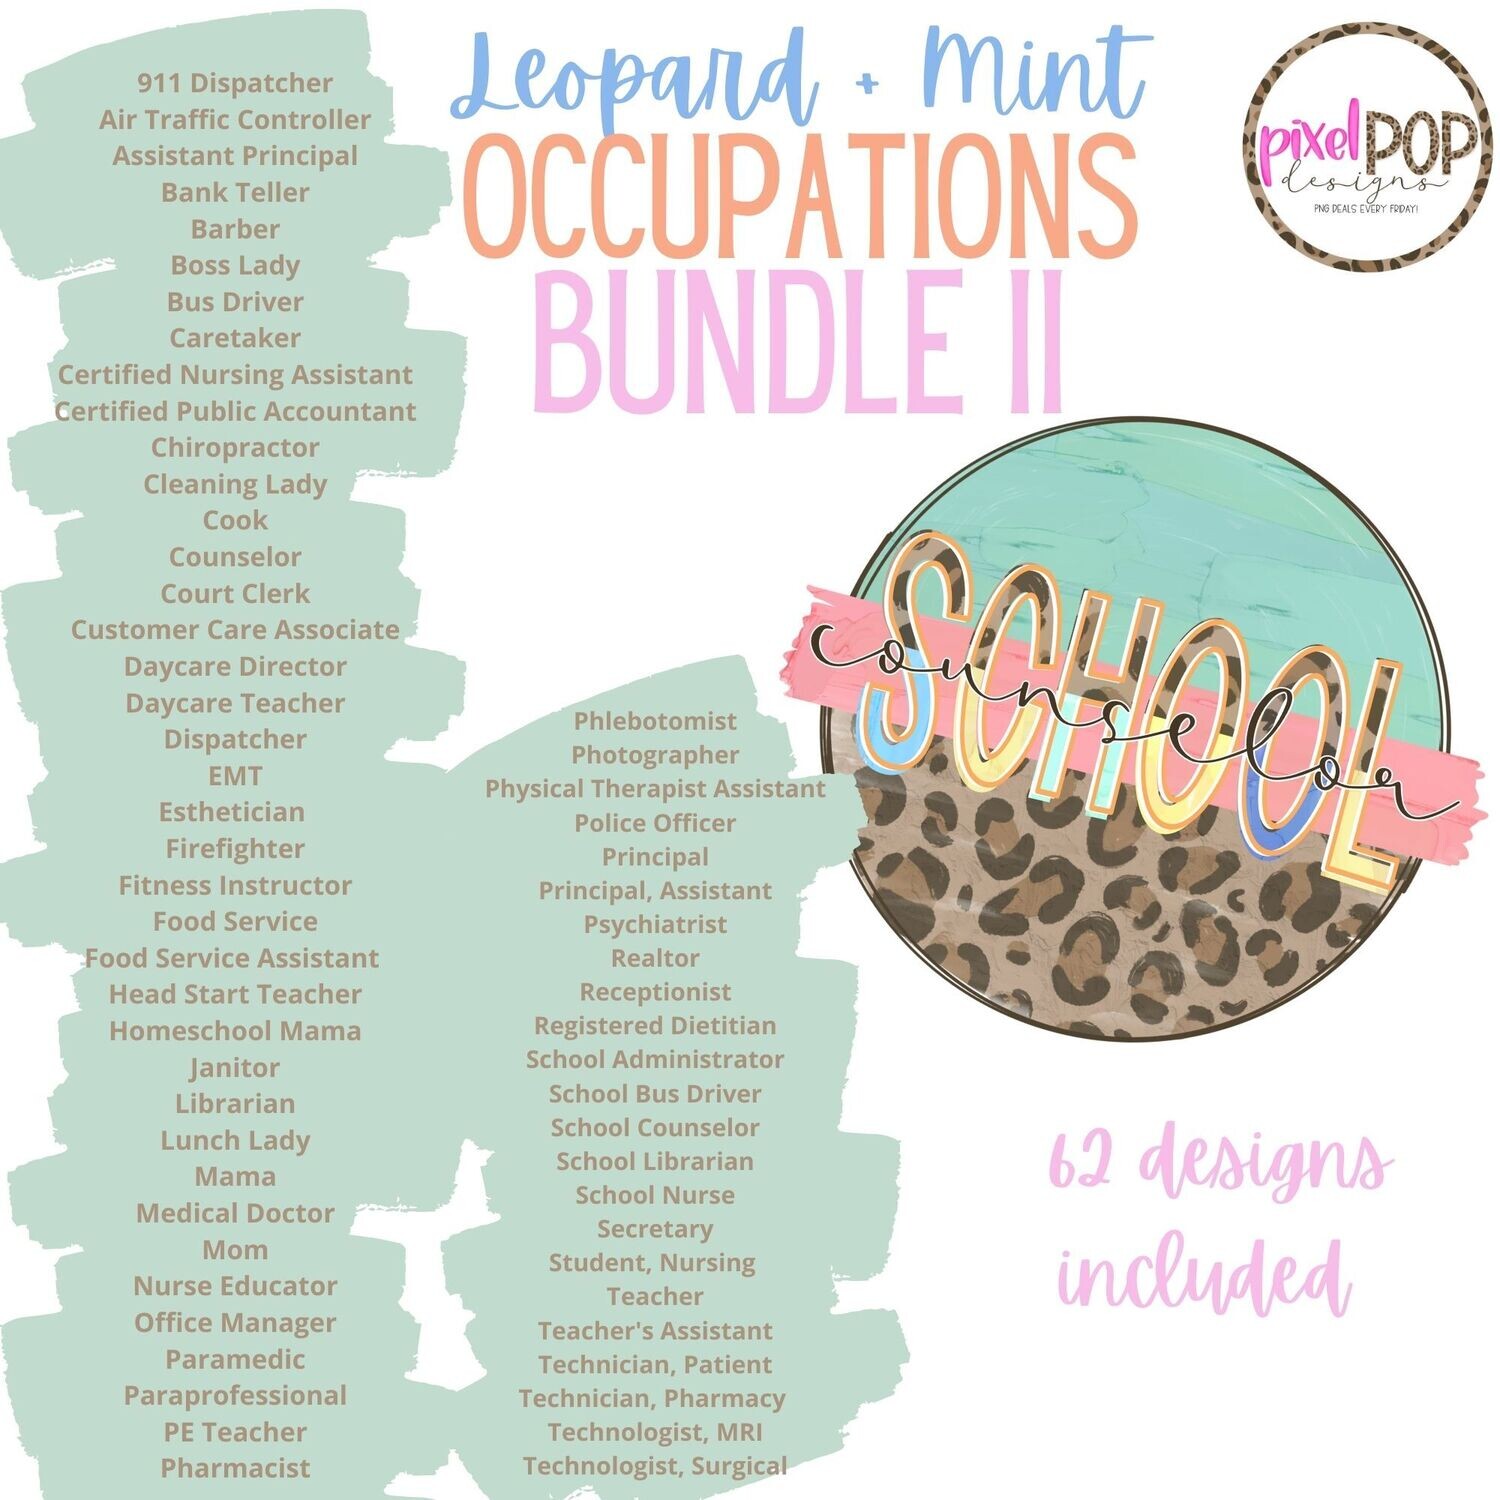 Leopard + Mint Occupations Bundle II - 62 Designs